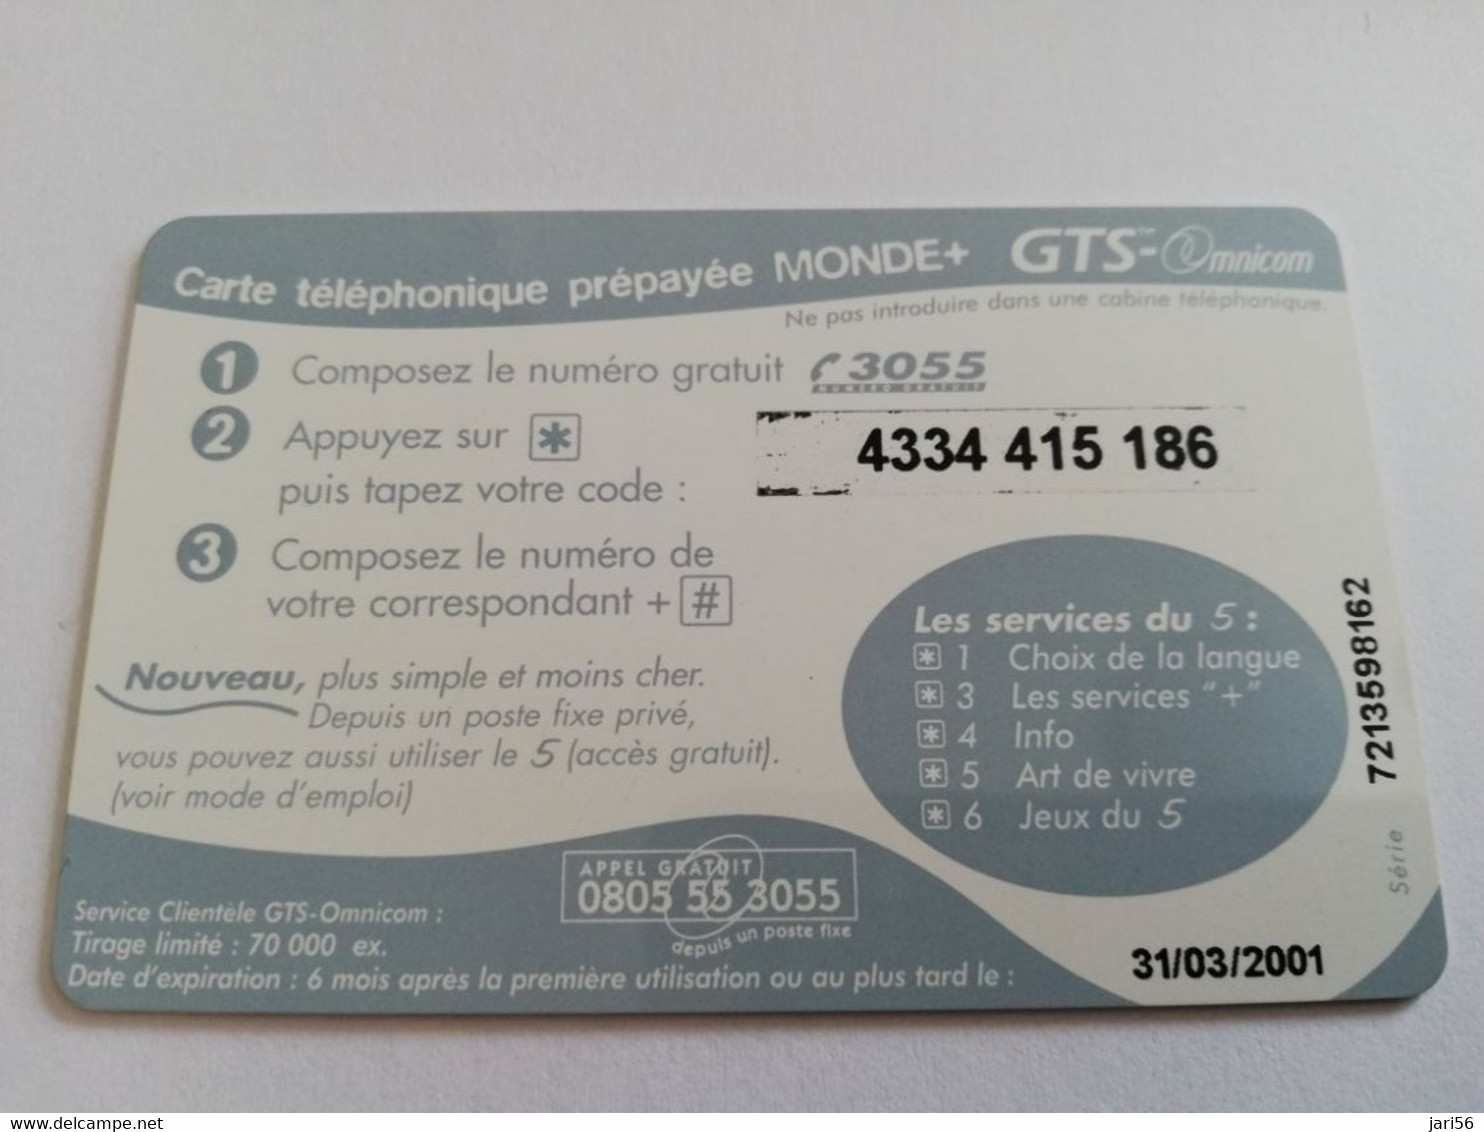 FRANCE/FRANKRIJK  OMNICOM  GTS-OMNICOM  100 FRANC  PREPAID  USED    ** 5584** - Mobicartes (GSM/SIM)